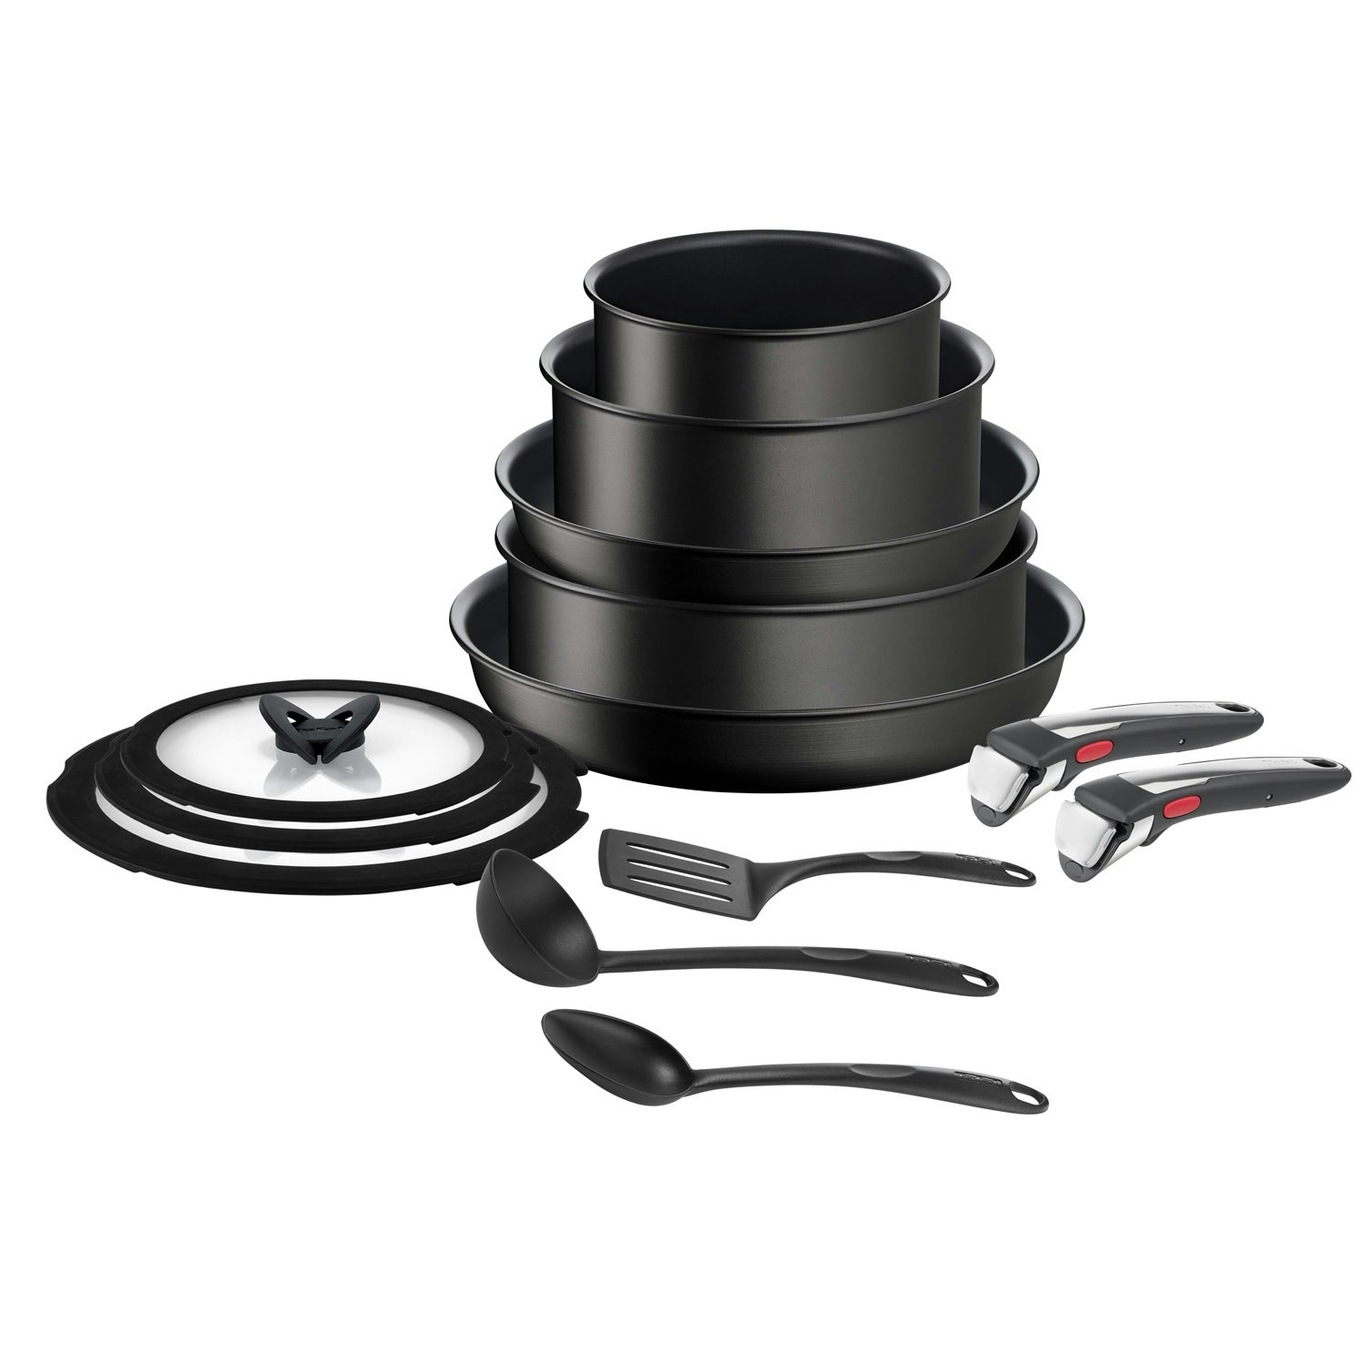 Buy Tefal Induction 5 Piece Aluminium Pan Set - Black